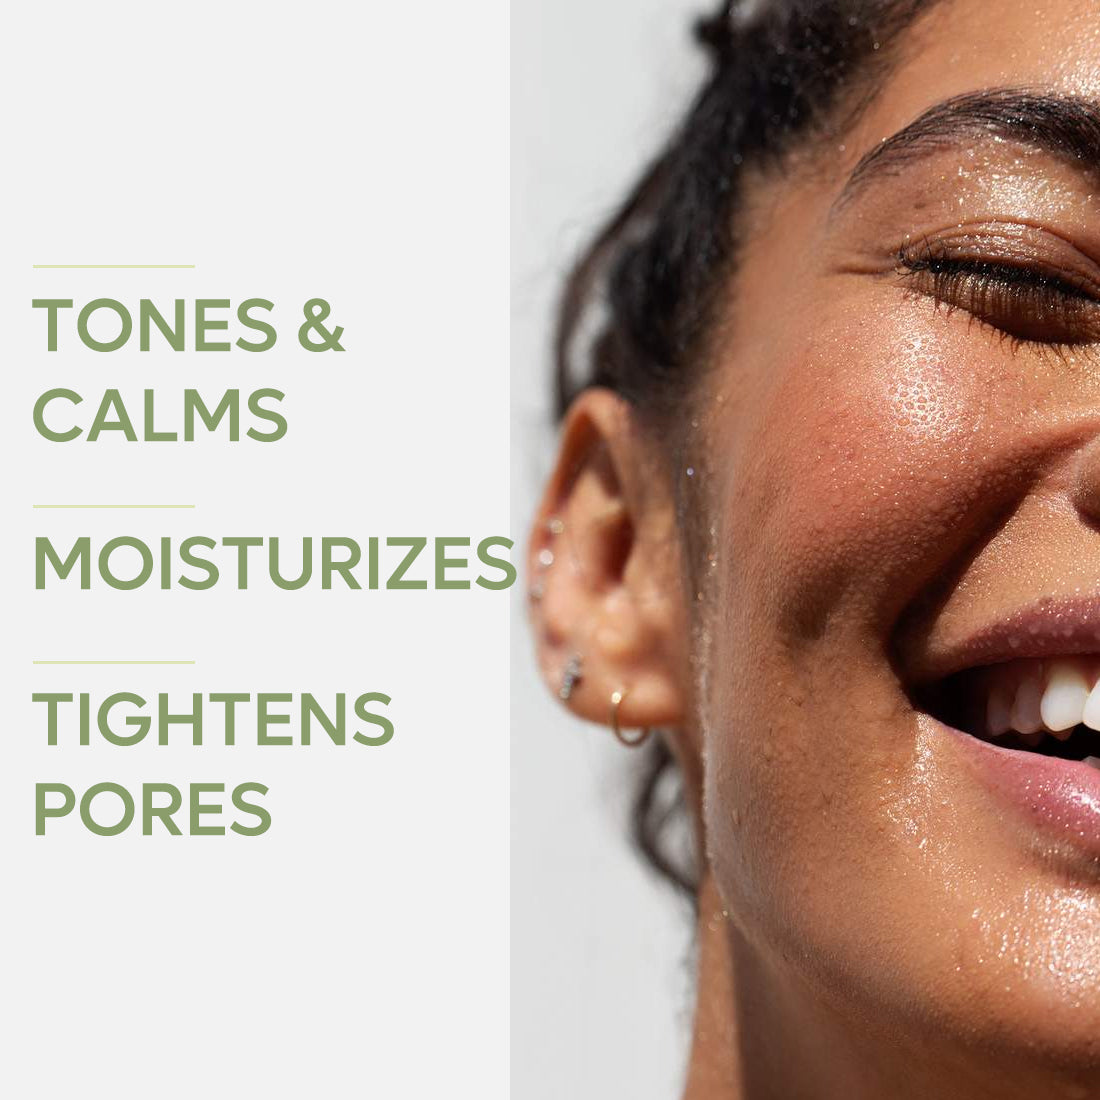 mCaffeine Cica 2in1 Toner-Serum with Green Tea - Calms & Tones Skin, Tightens Pores & Moisturizes